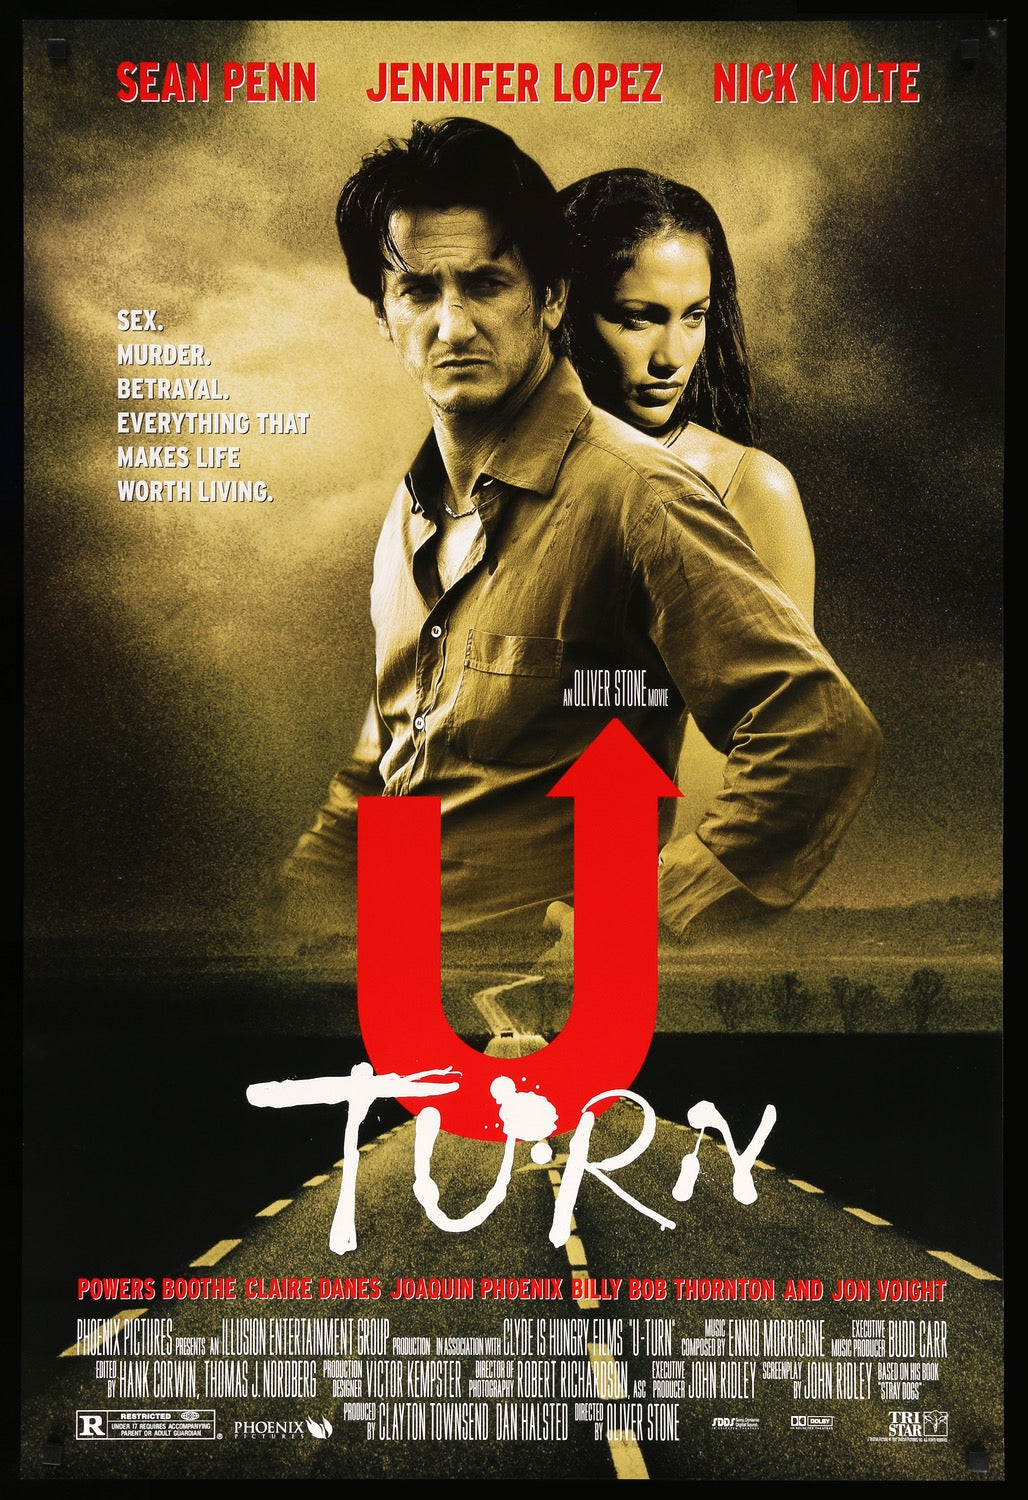 U Turn (1997) original movie poster for sale at Original Film Art